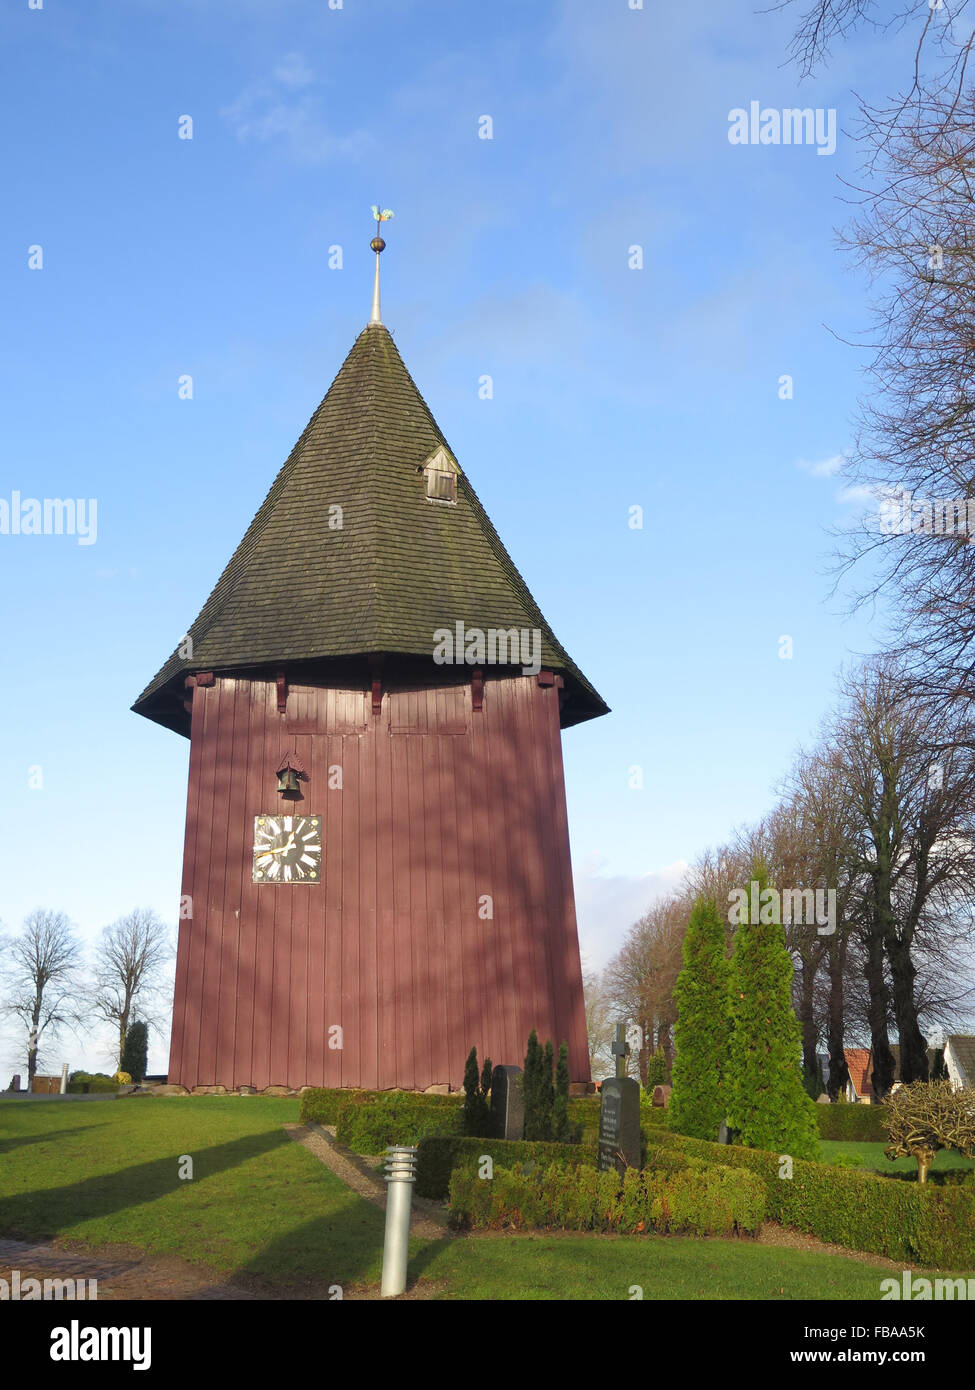 Broager church wooden clock tower, Denmark Stock Photo